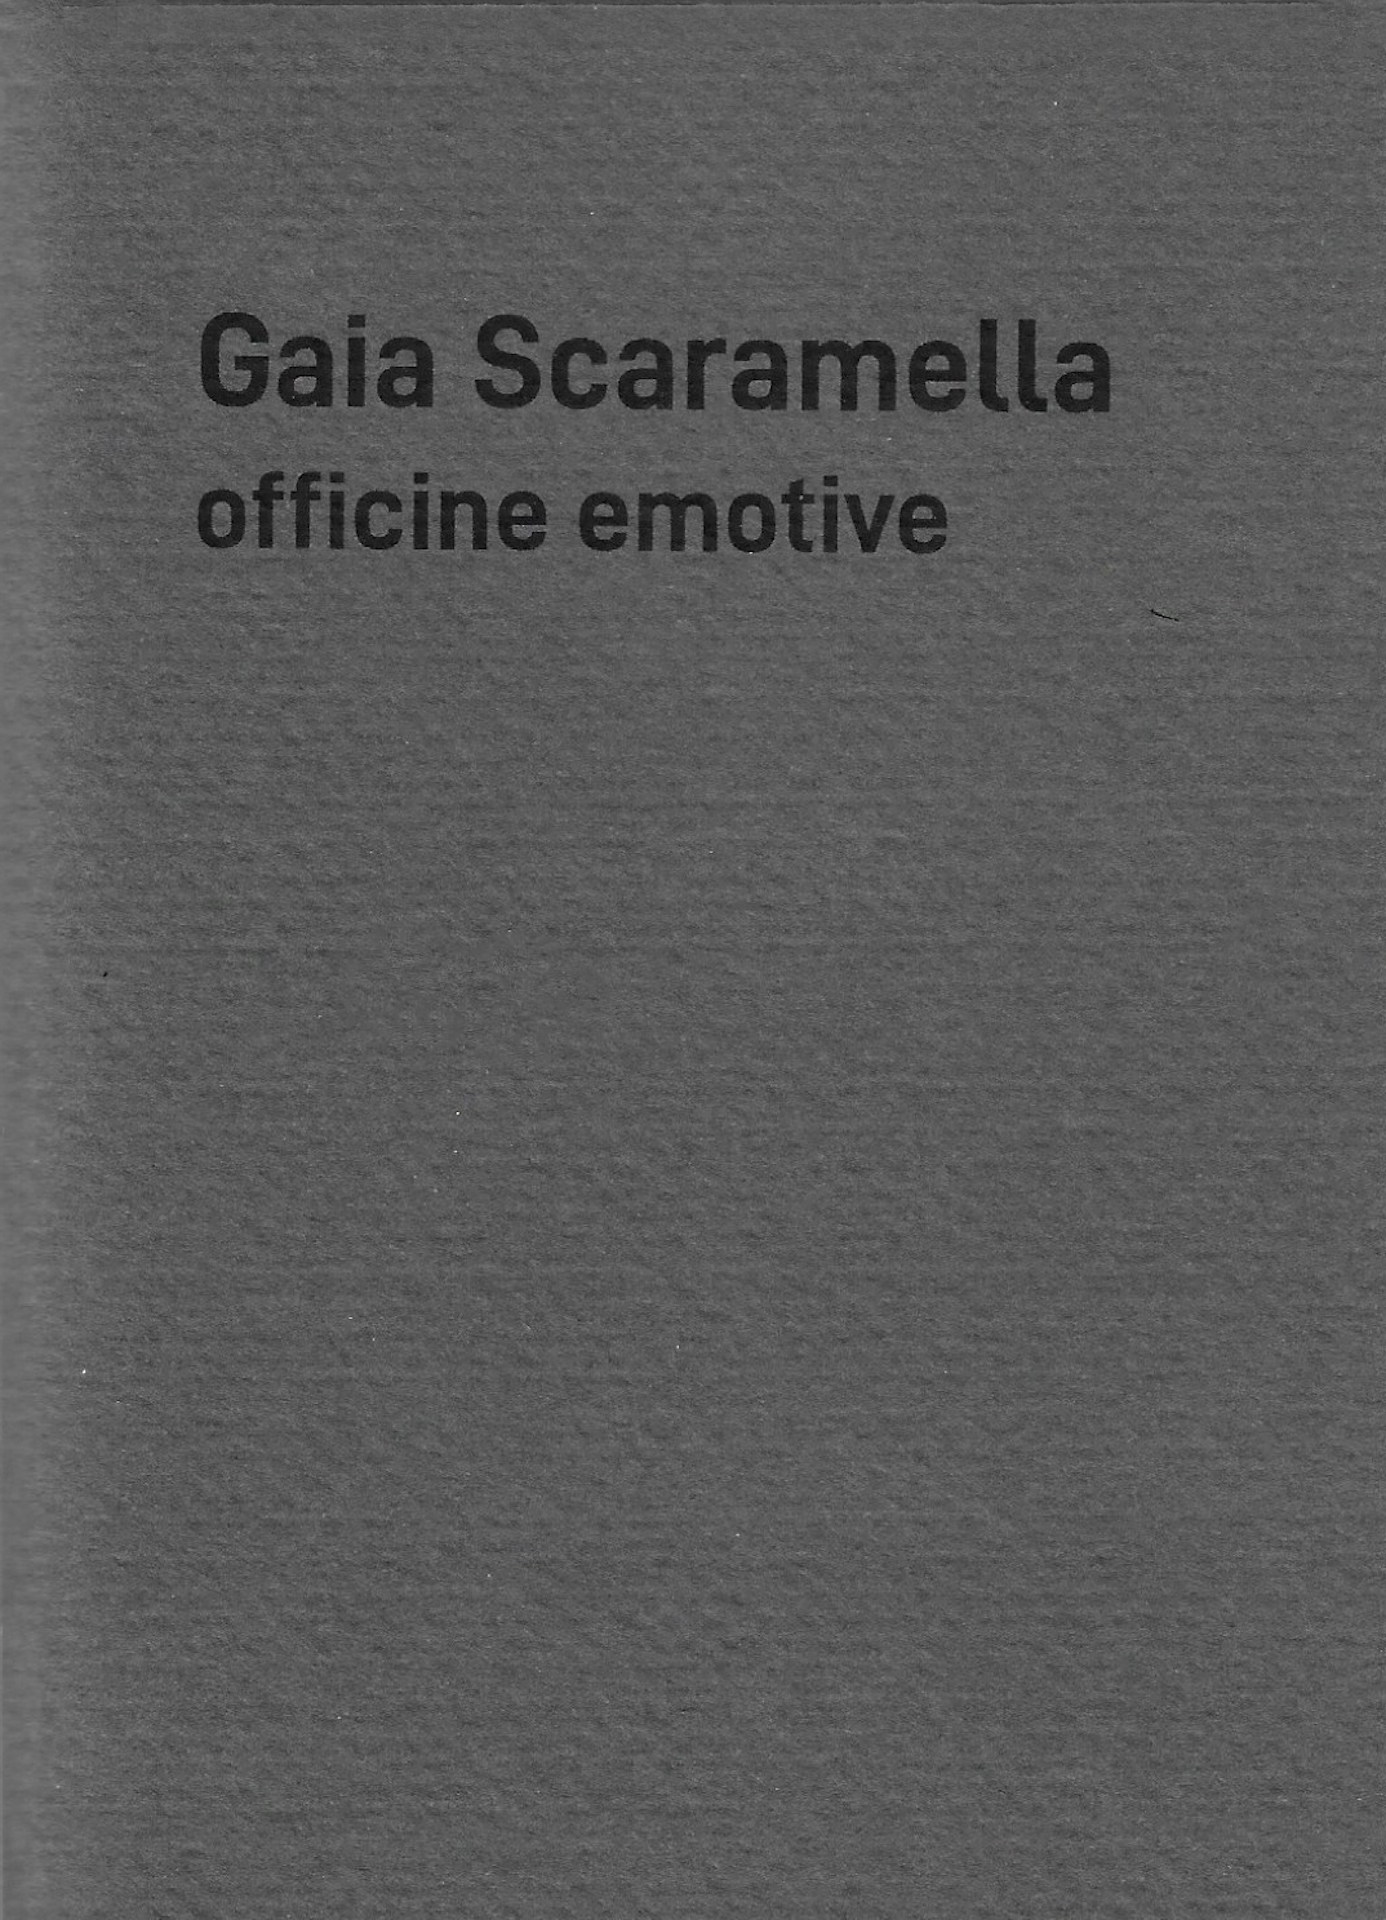 Gaia Scaramella, Officine emotive, 2022